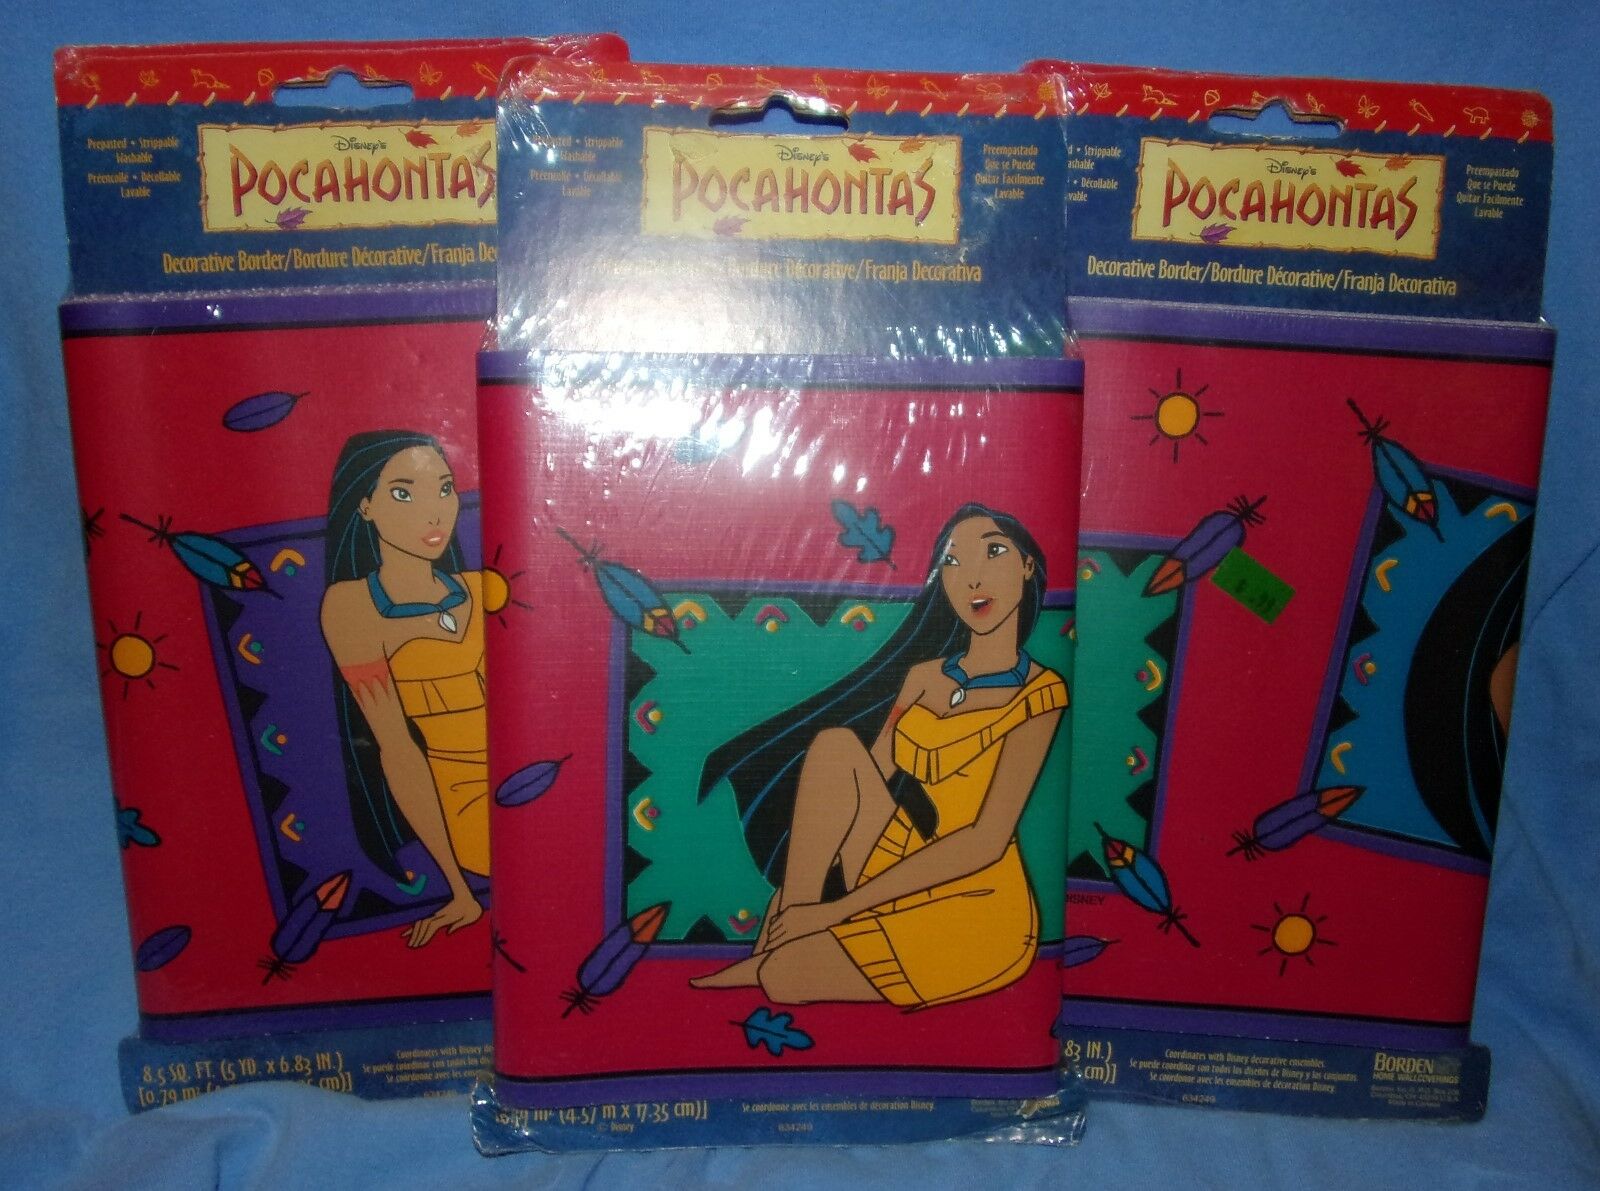 Upc 043799050849 Product Image For Disney Pocahontas - Novel , HD Wallpaper & Backgrounds